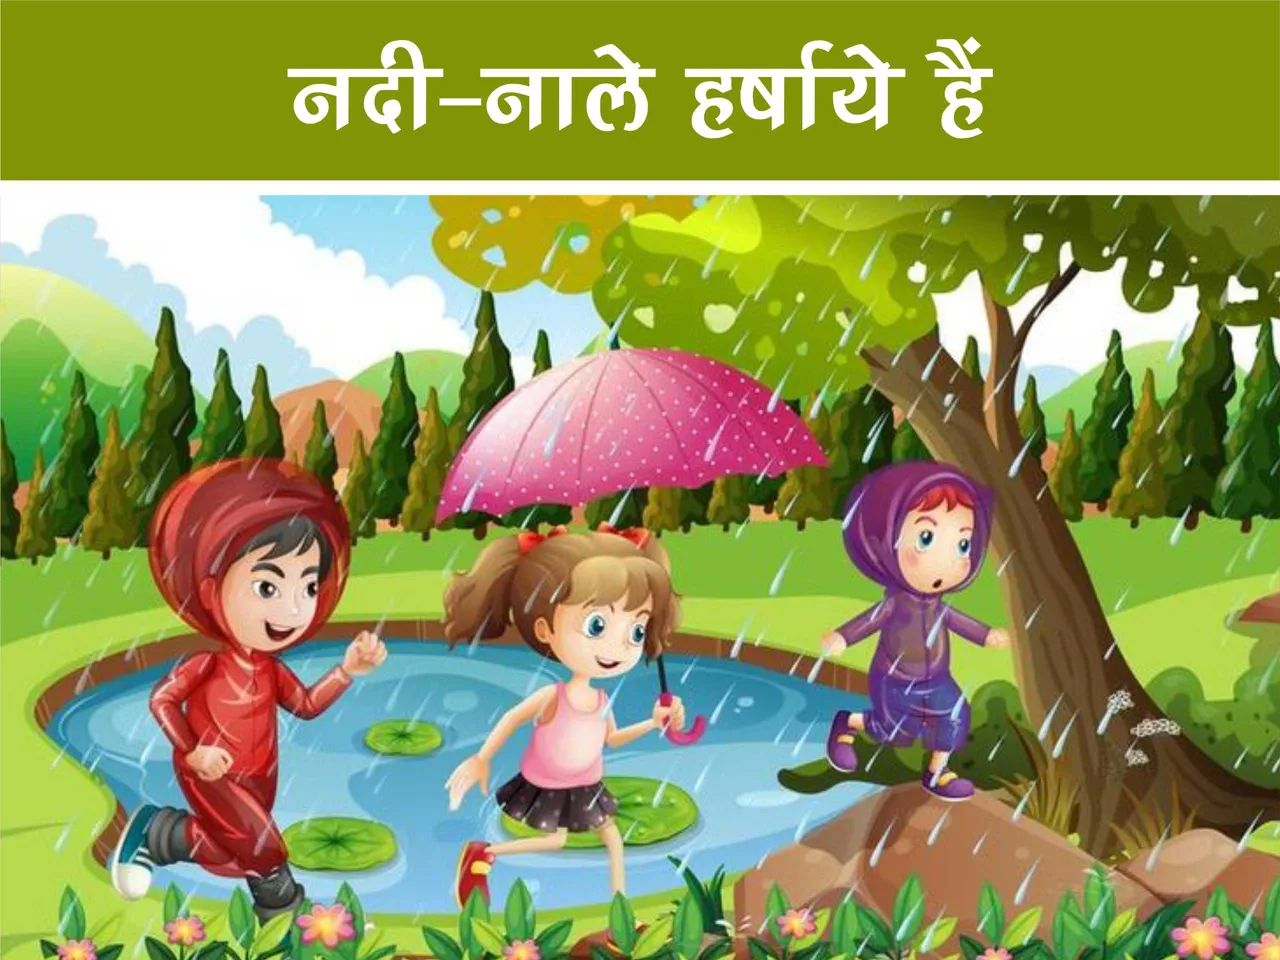 Kids playing in rain cartoon image